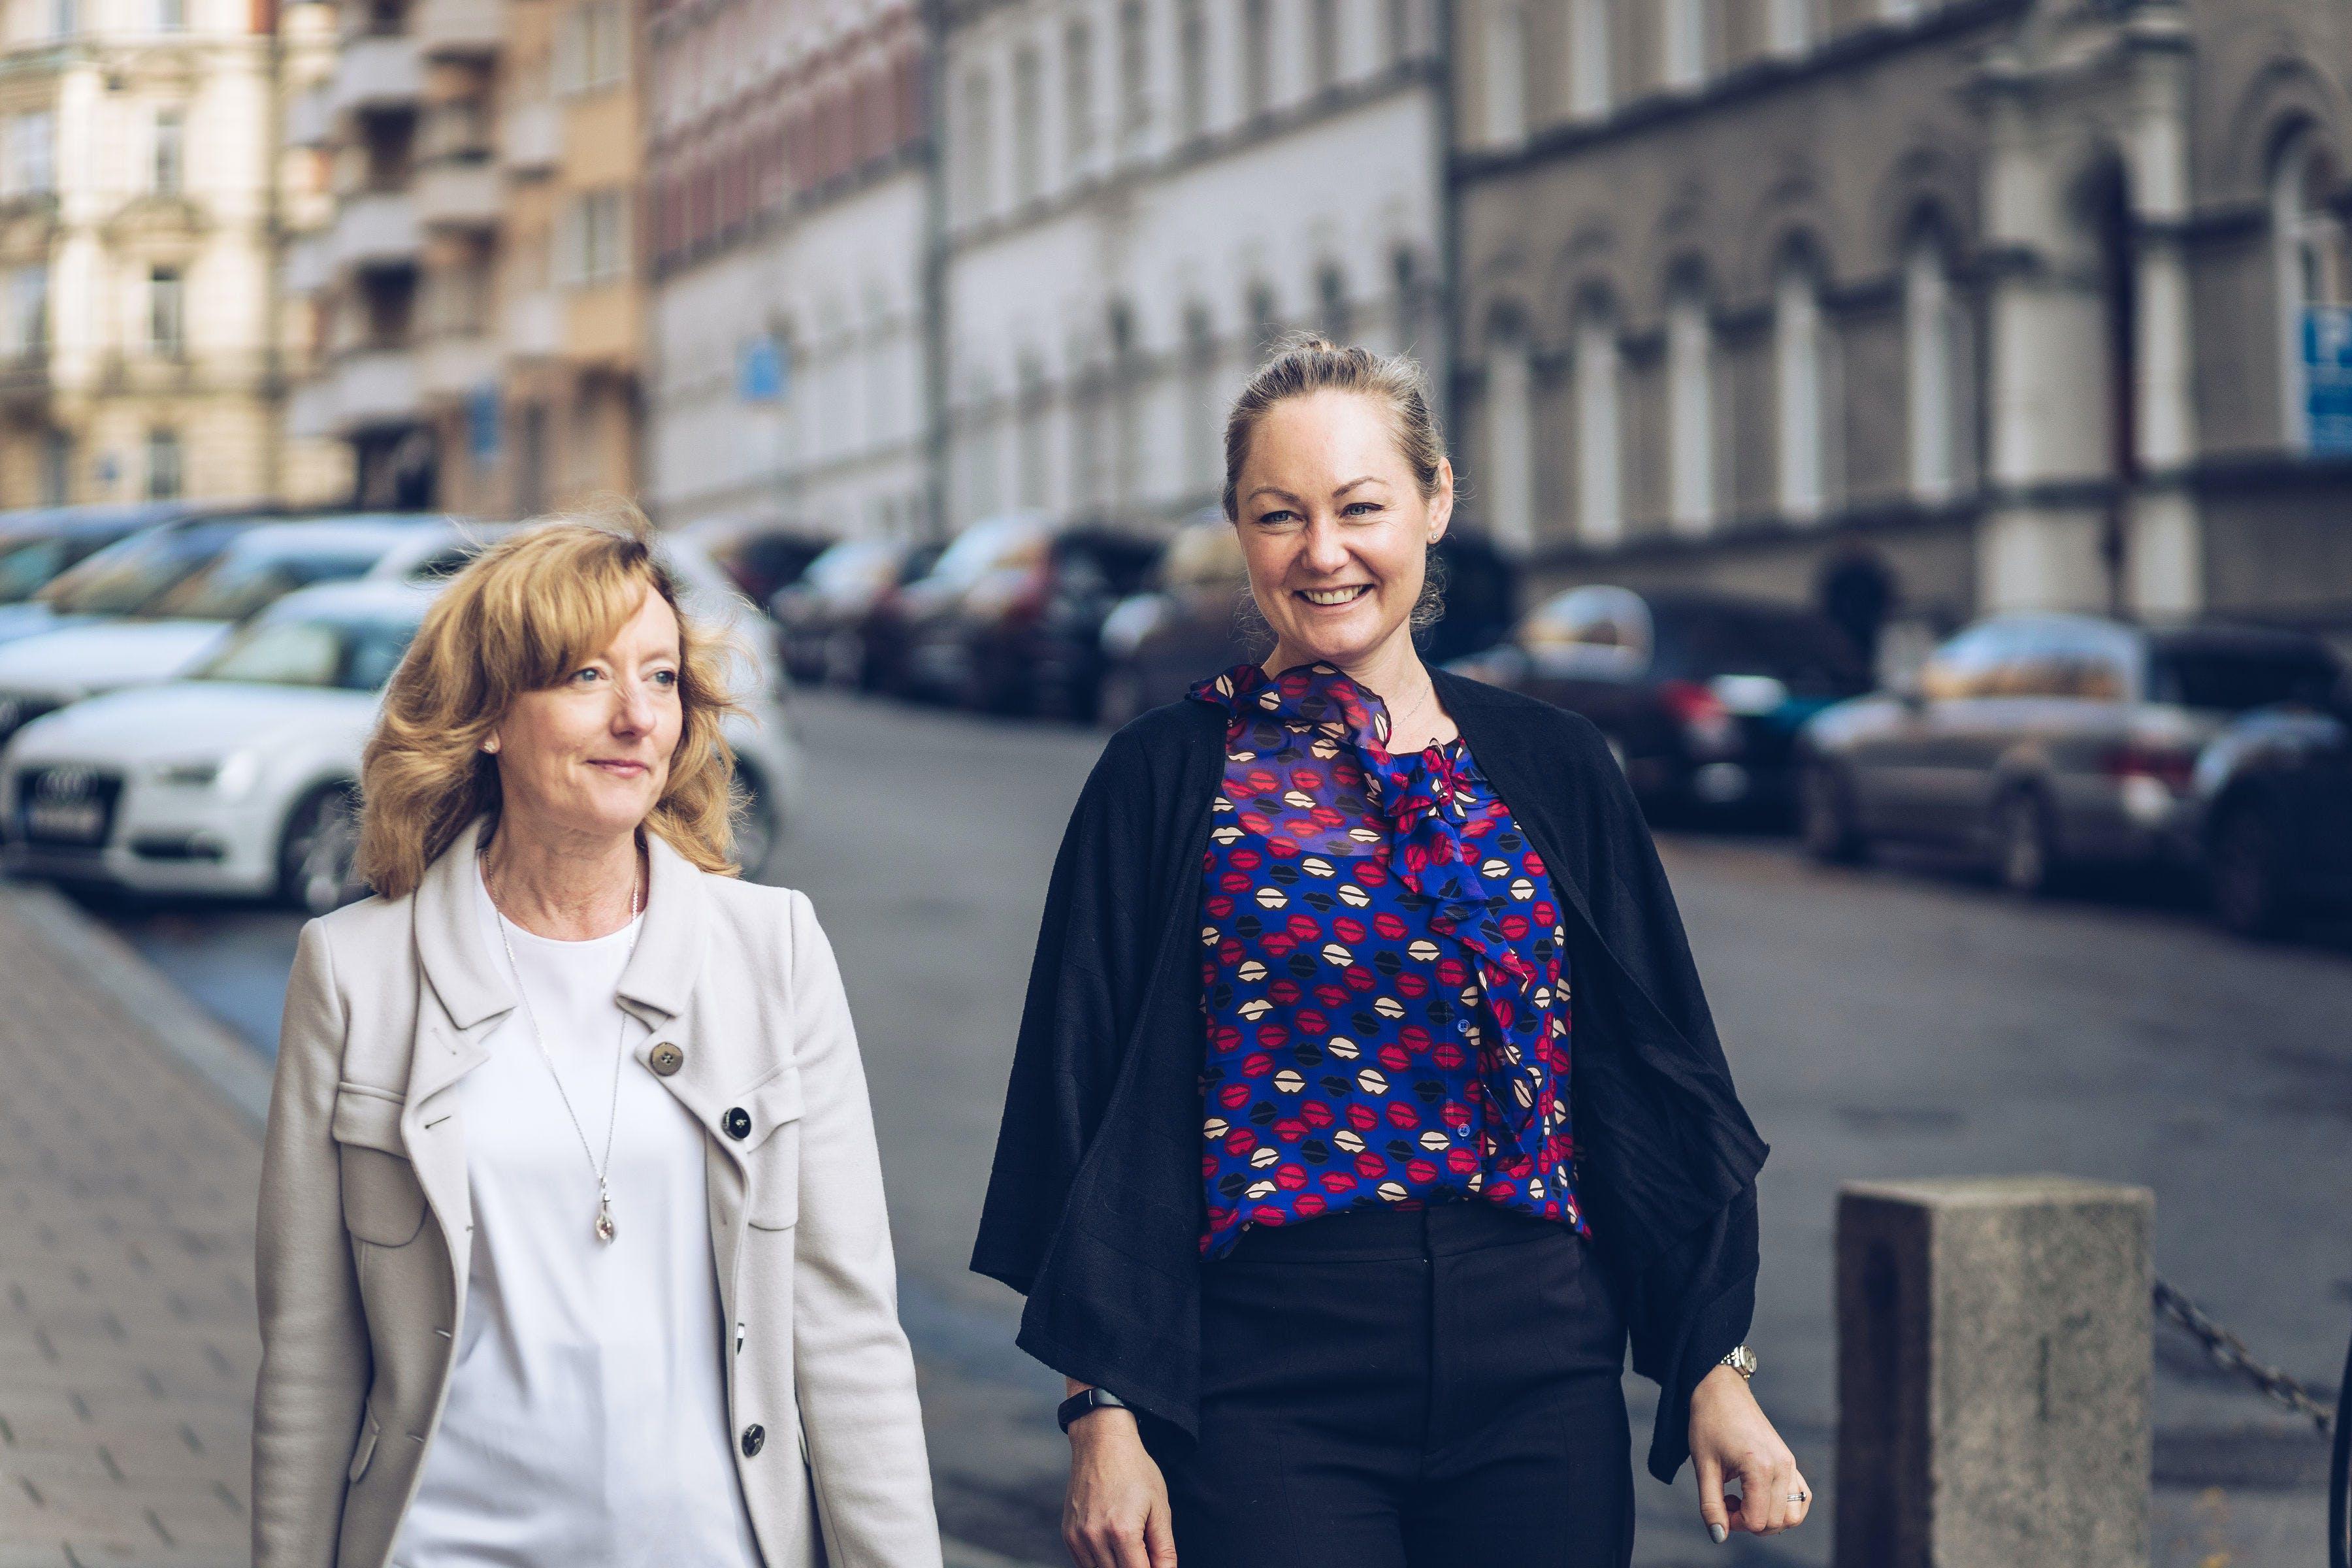 Ellinor Hult and Astrid Samuelsson, the fund managers of Avanza's new fund Avanza Healthcare bu Samuelsson & Hult